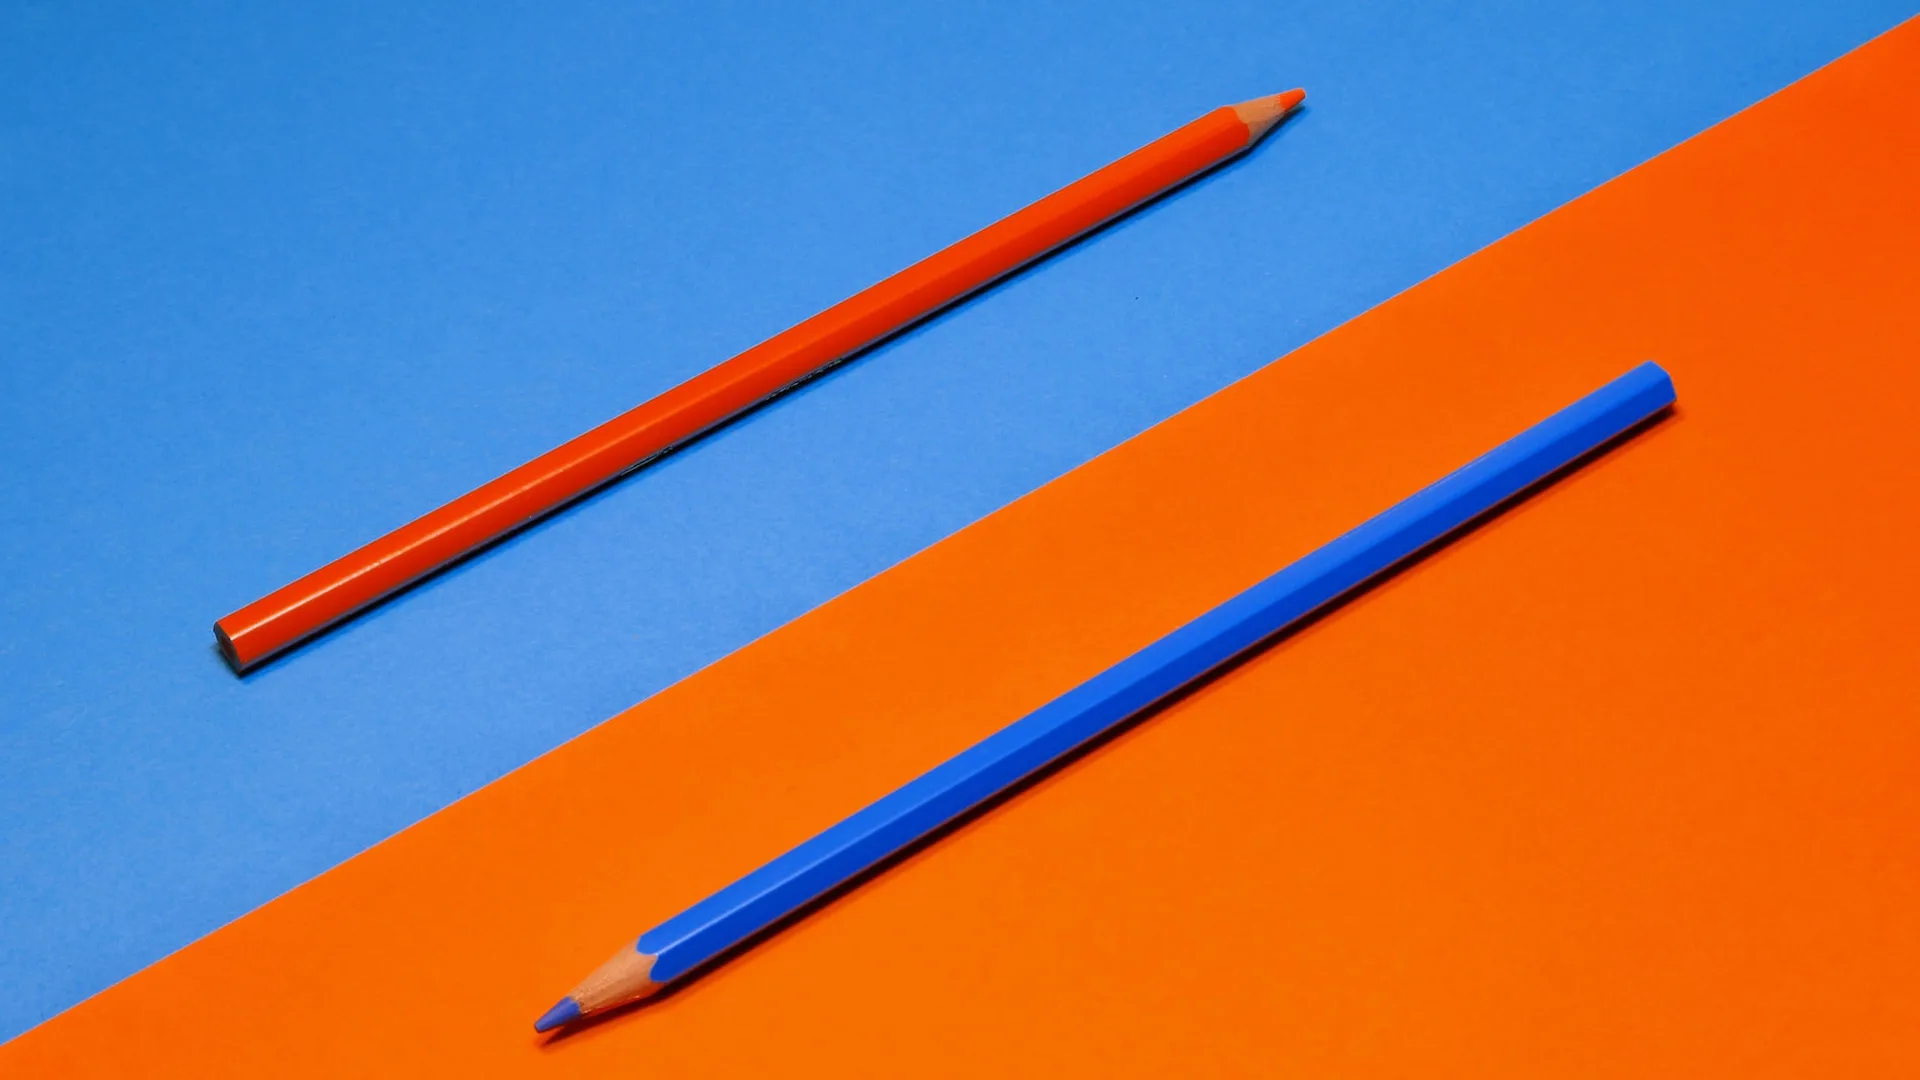 Orange and blue pencils on orange and blue paper